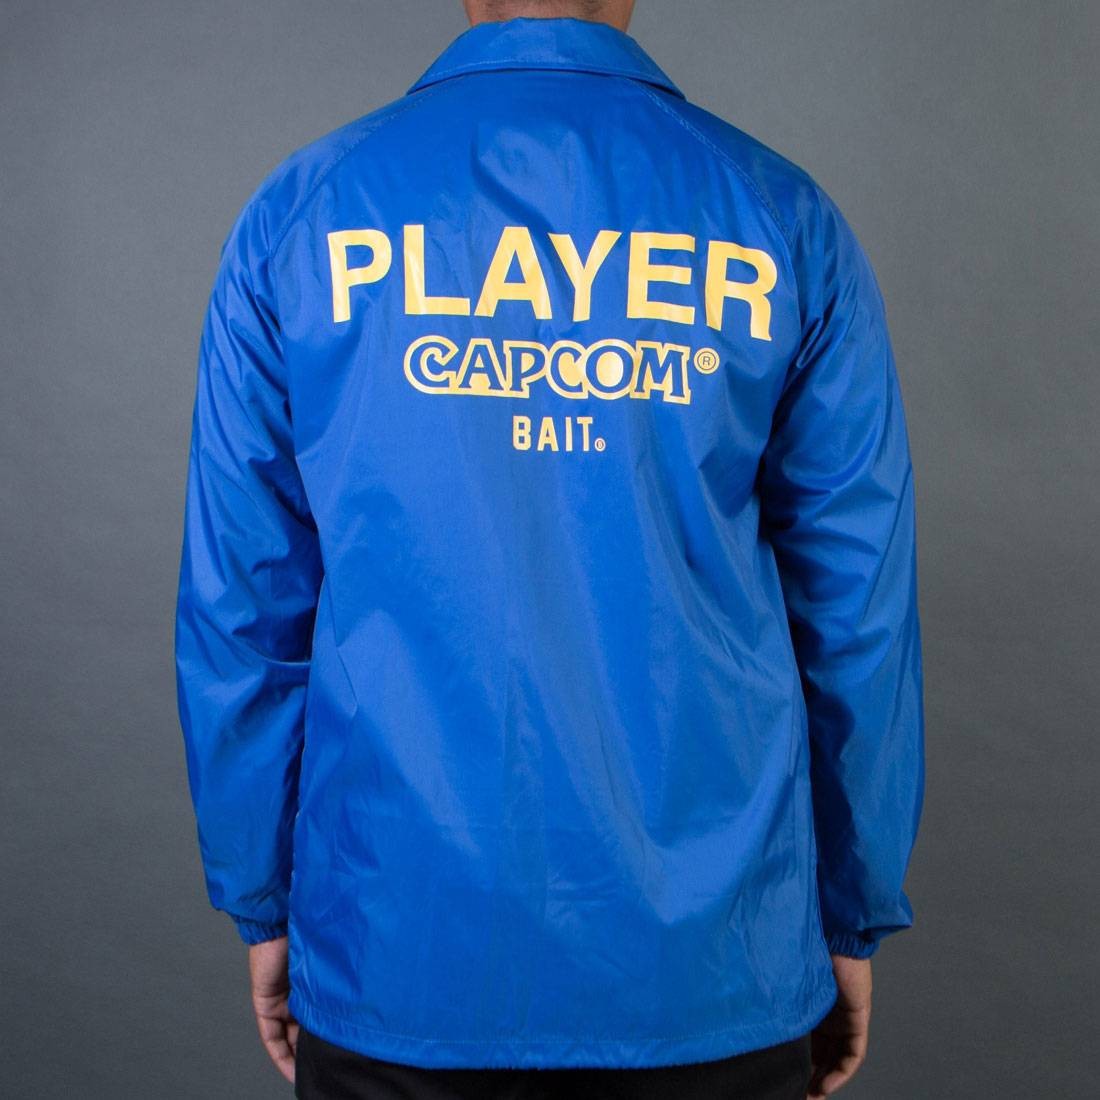 Cheap Jmksport Jordan Outlet x Street Fighter Men Capcom Player Jacket (Diesel / royal)